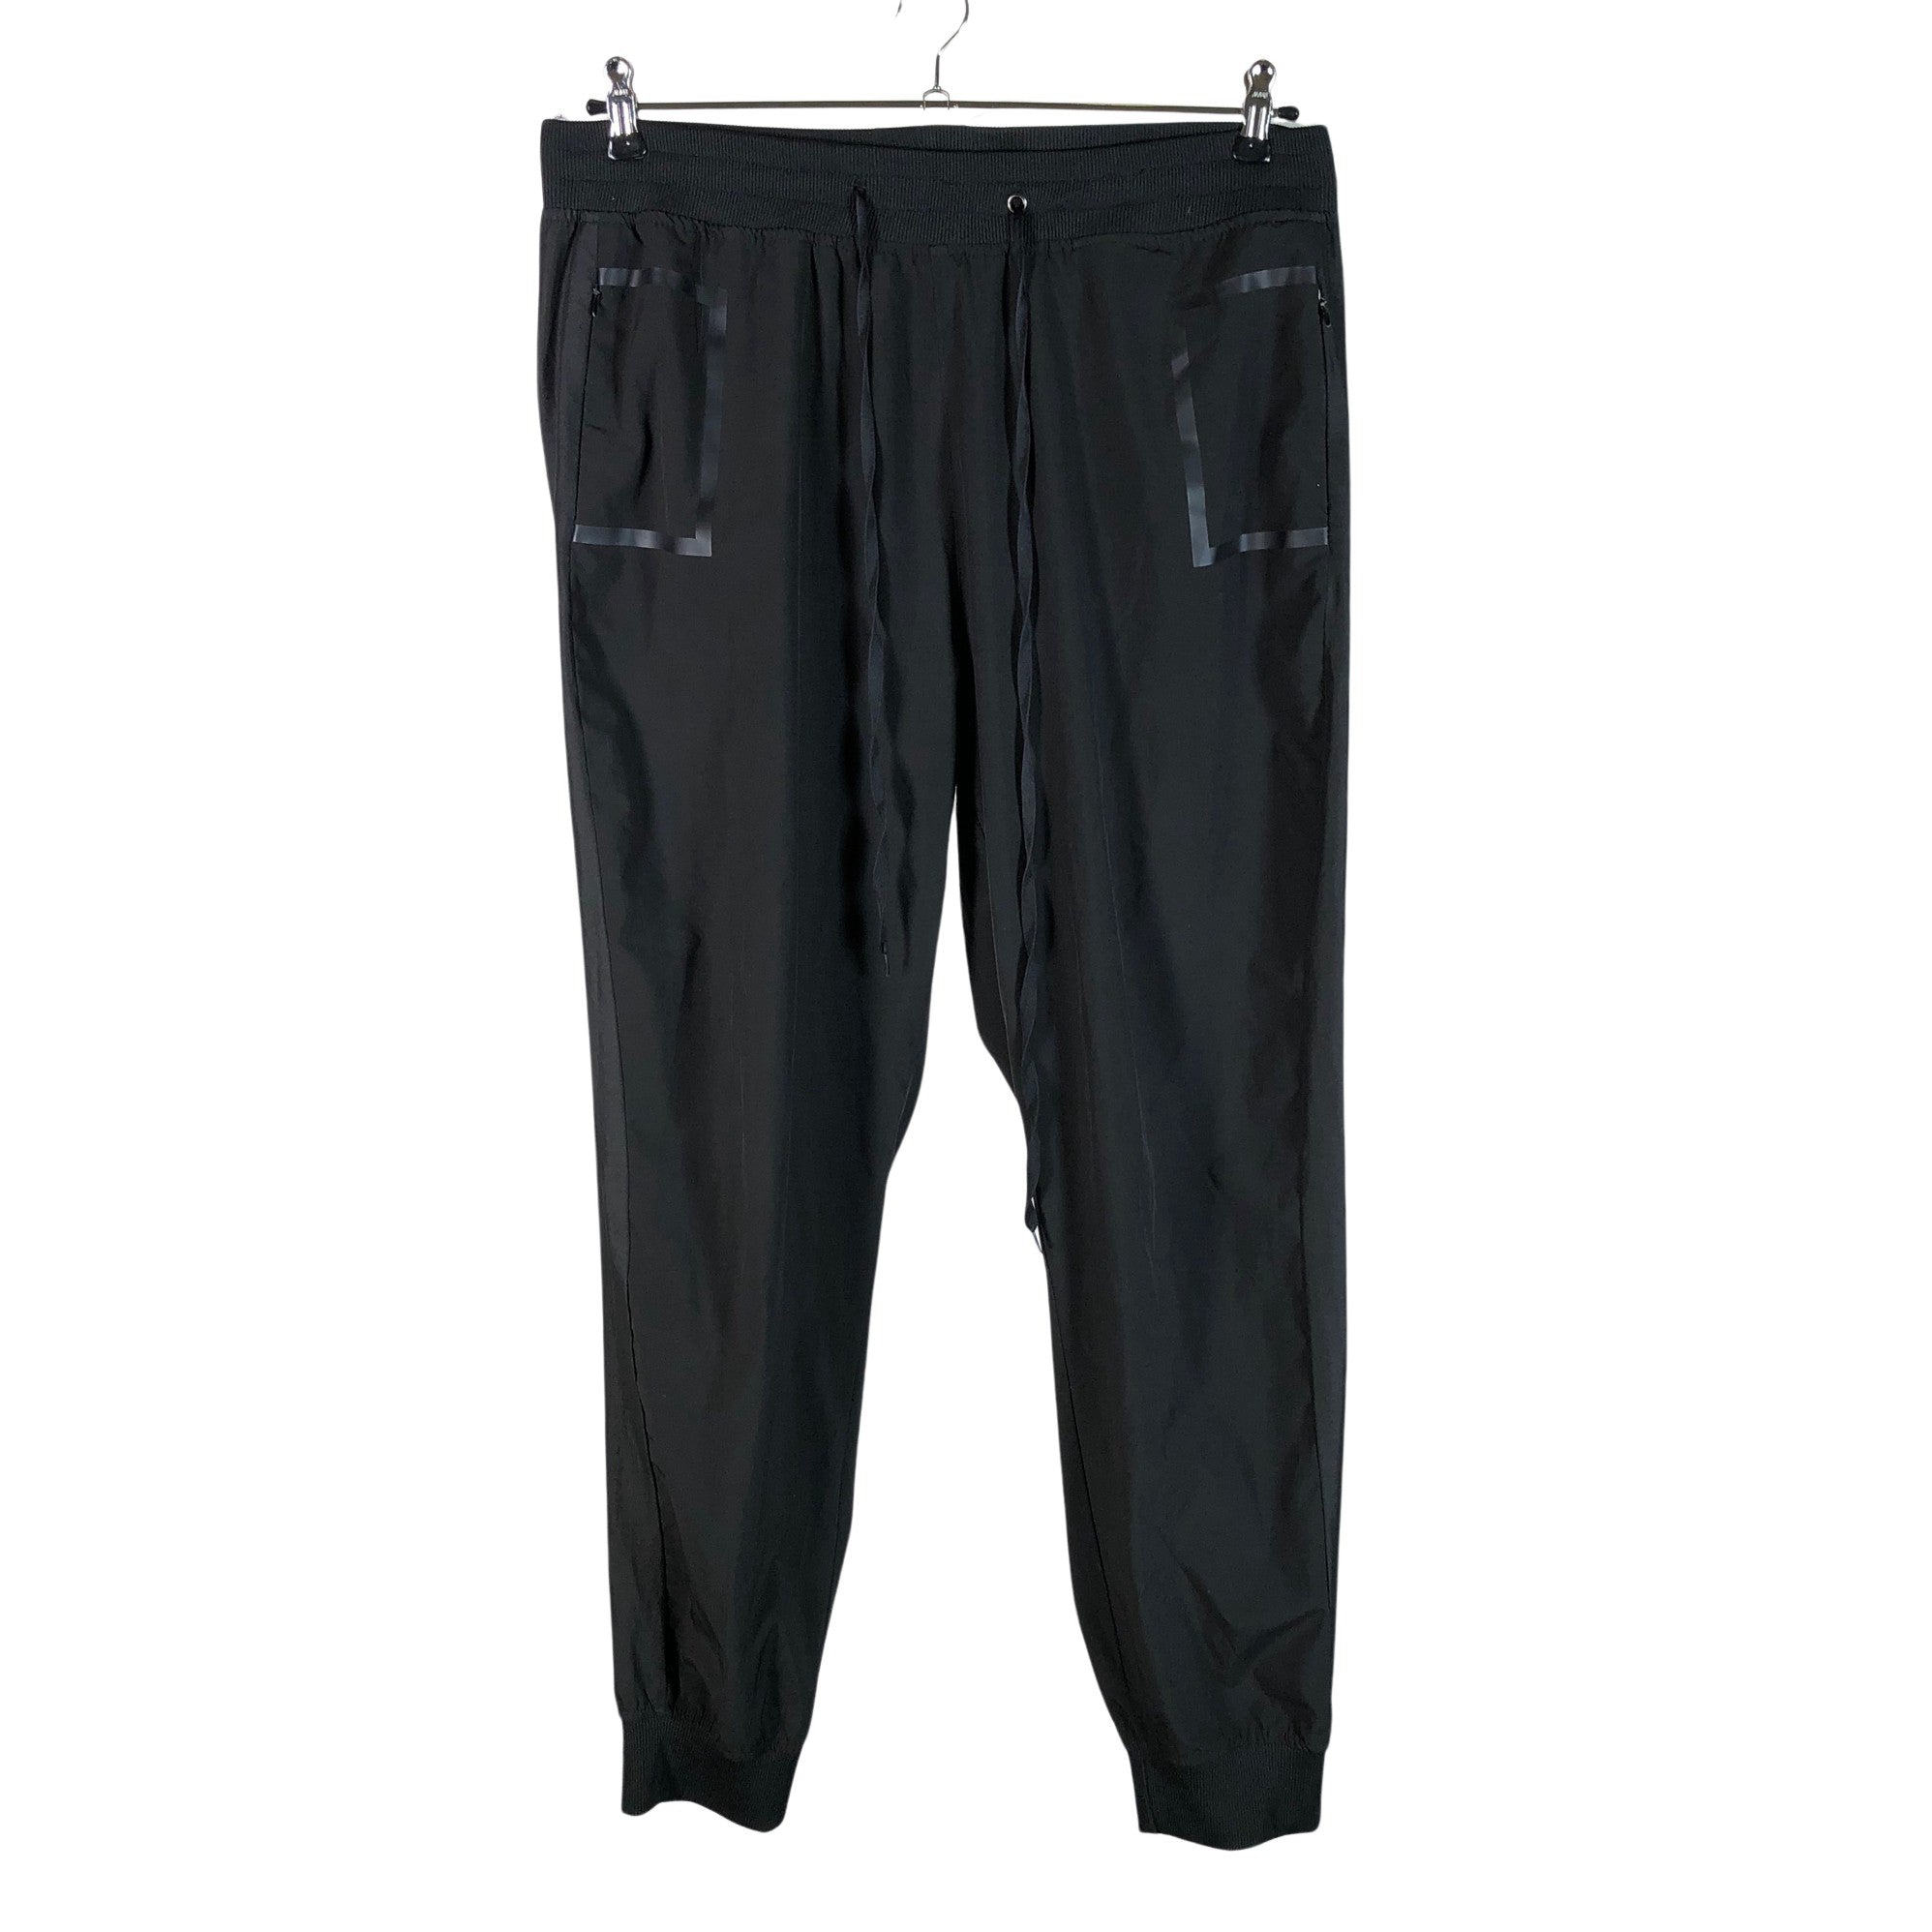 Women's Avia Outdoor pants, size 46 (Black)